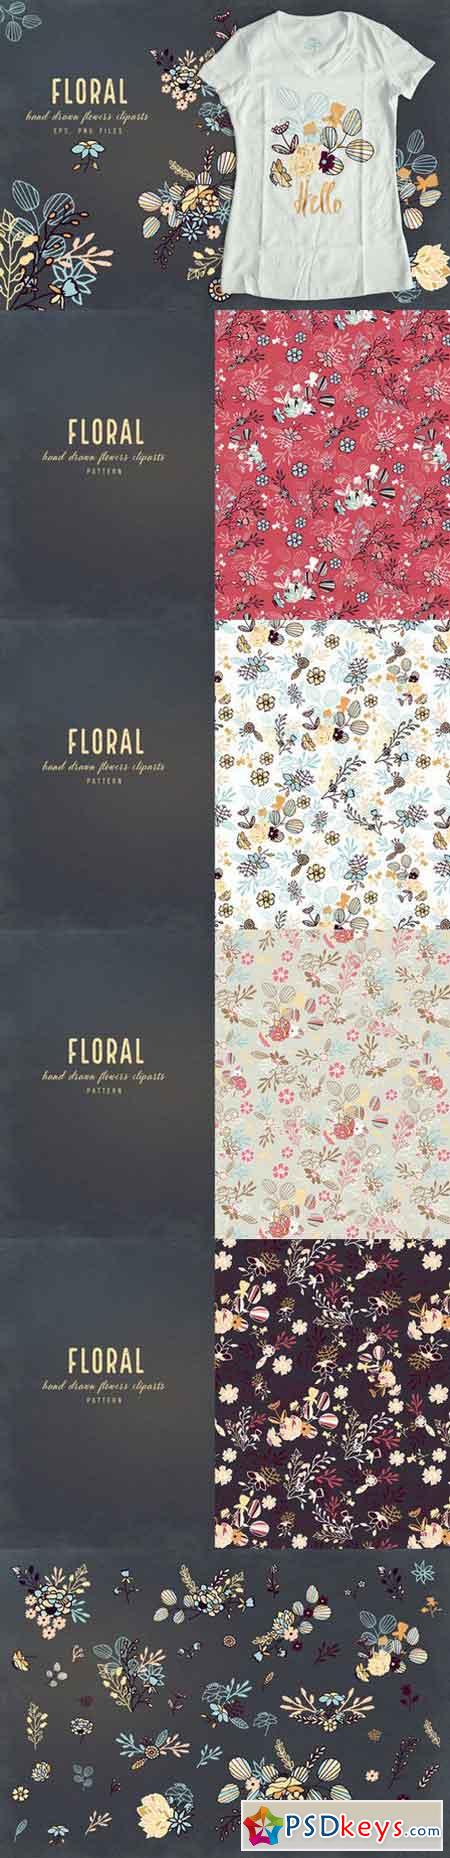 Floral Cliparts 656152